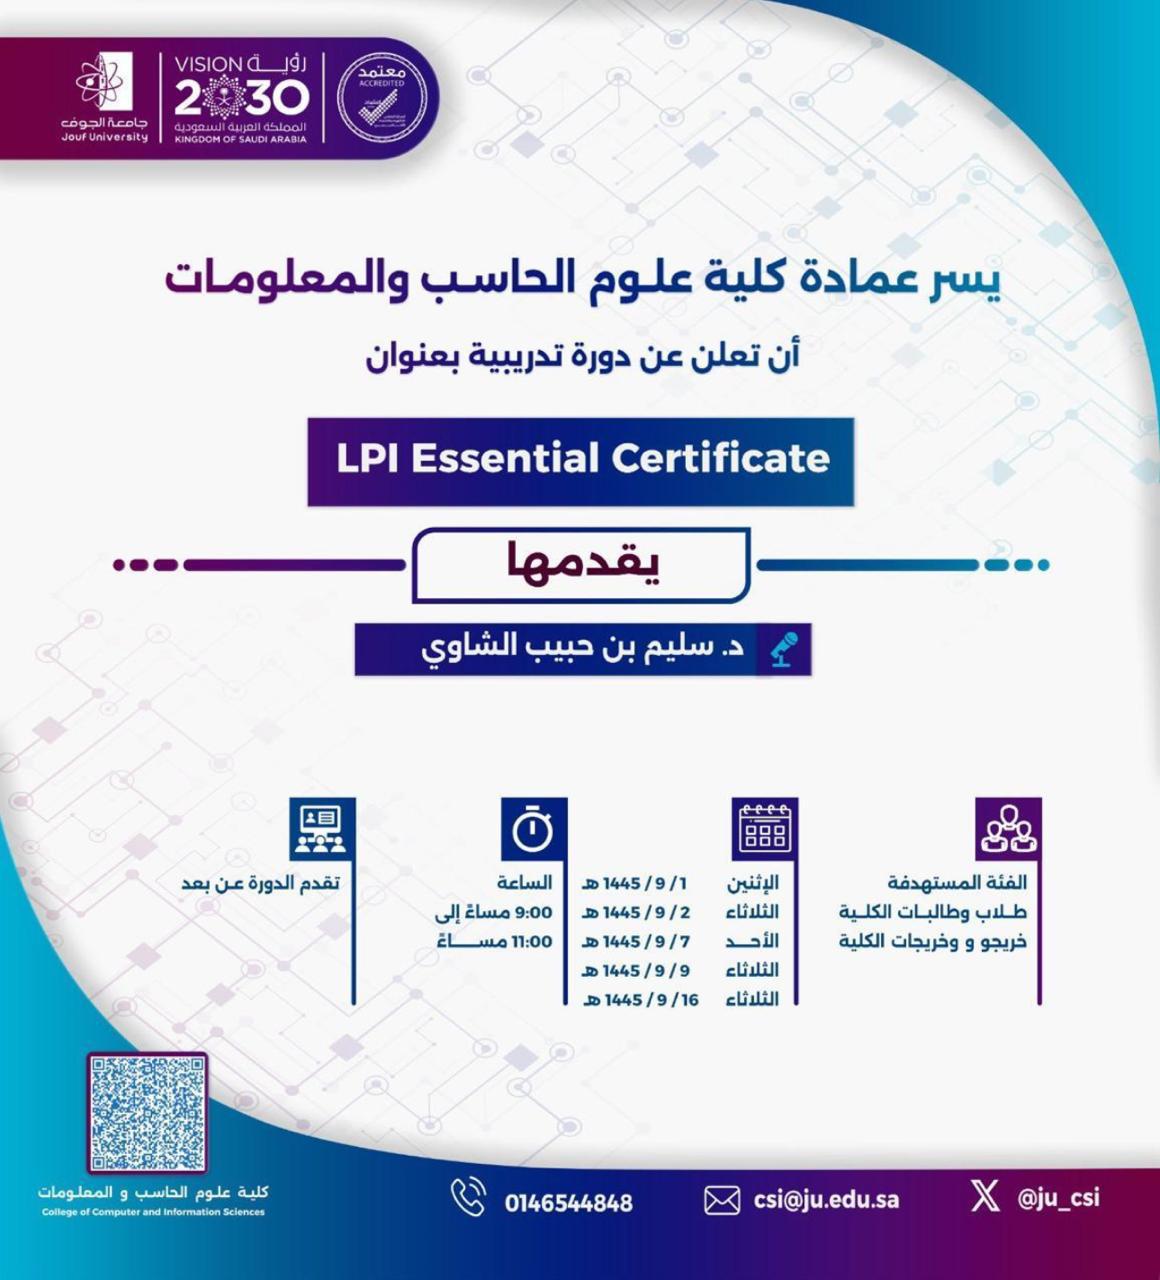 LPI Essential Certificate